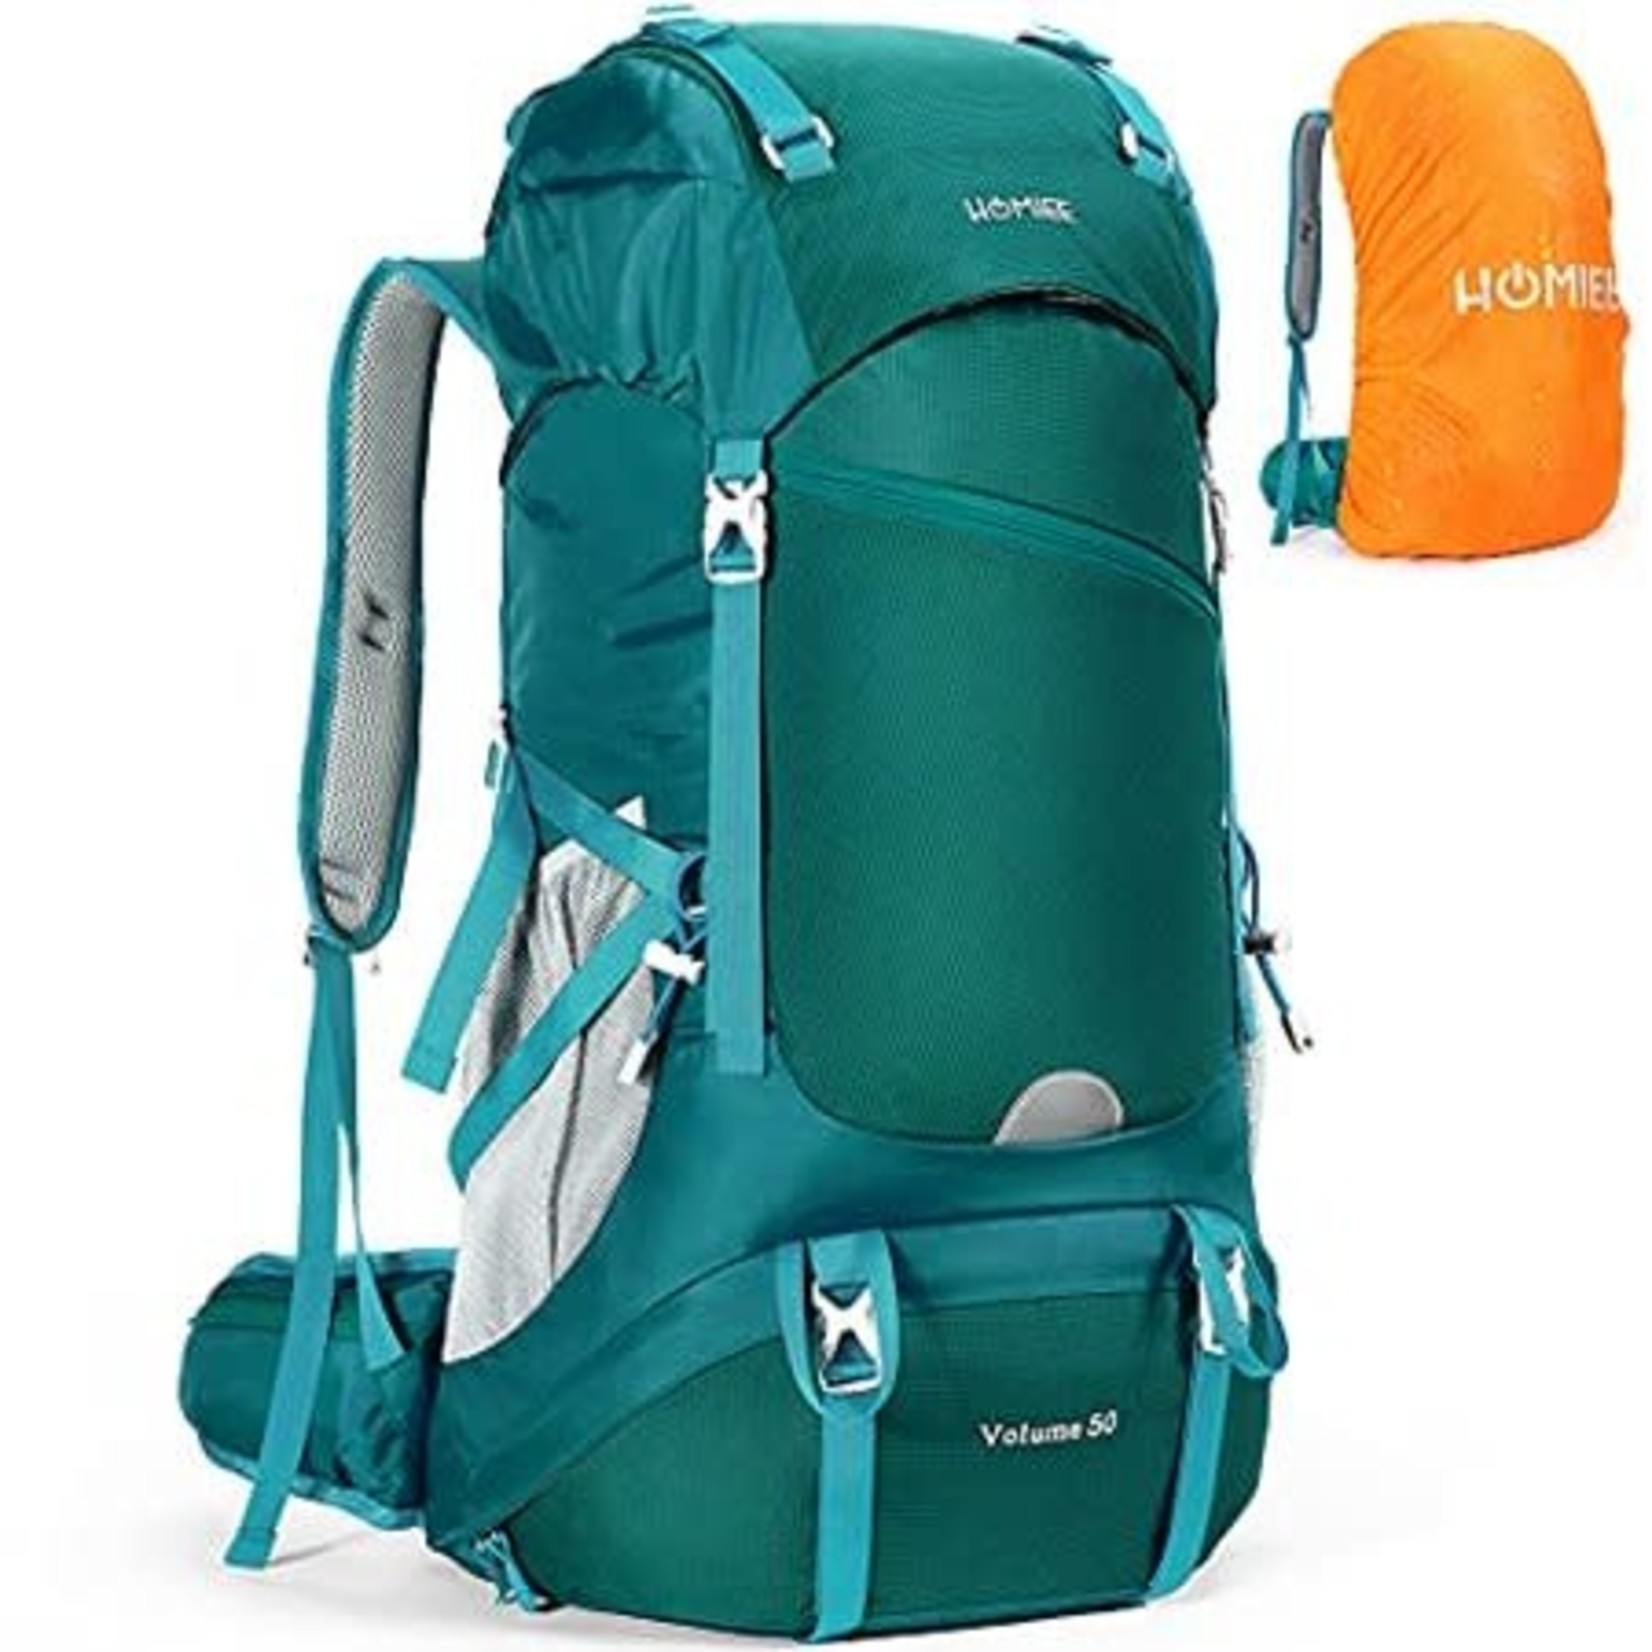 Homiee 50L Hiking Backpack